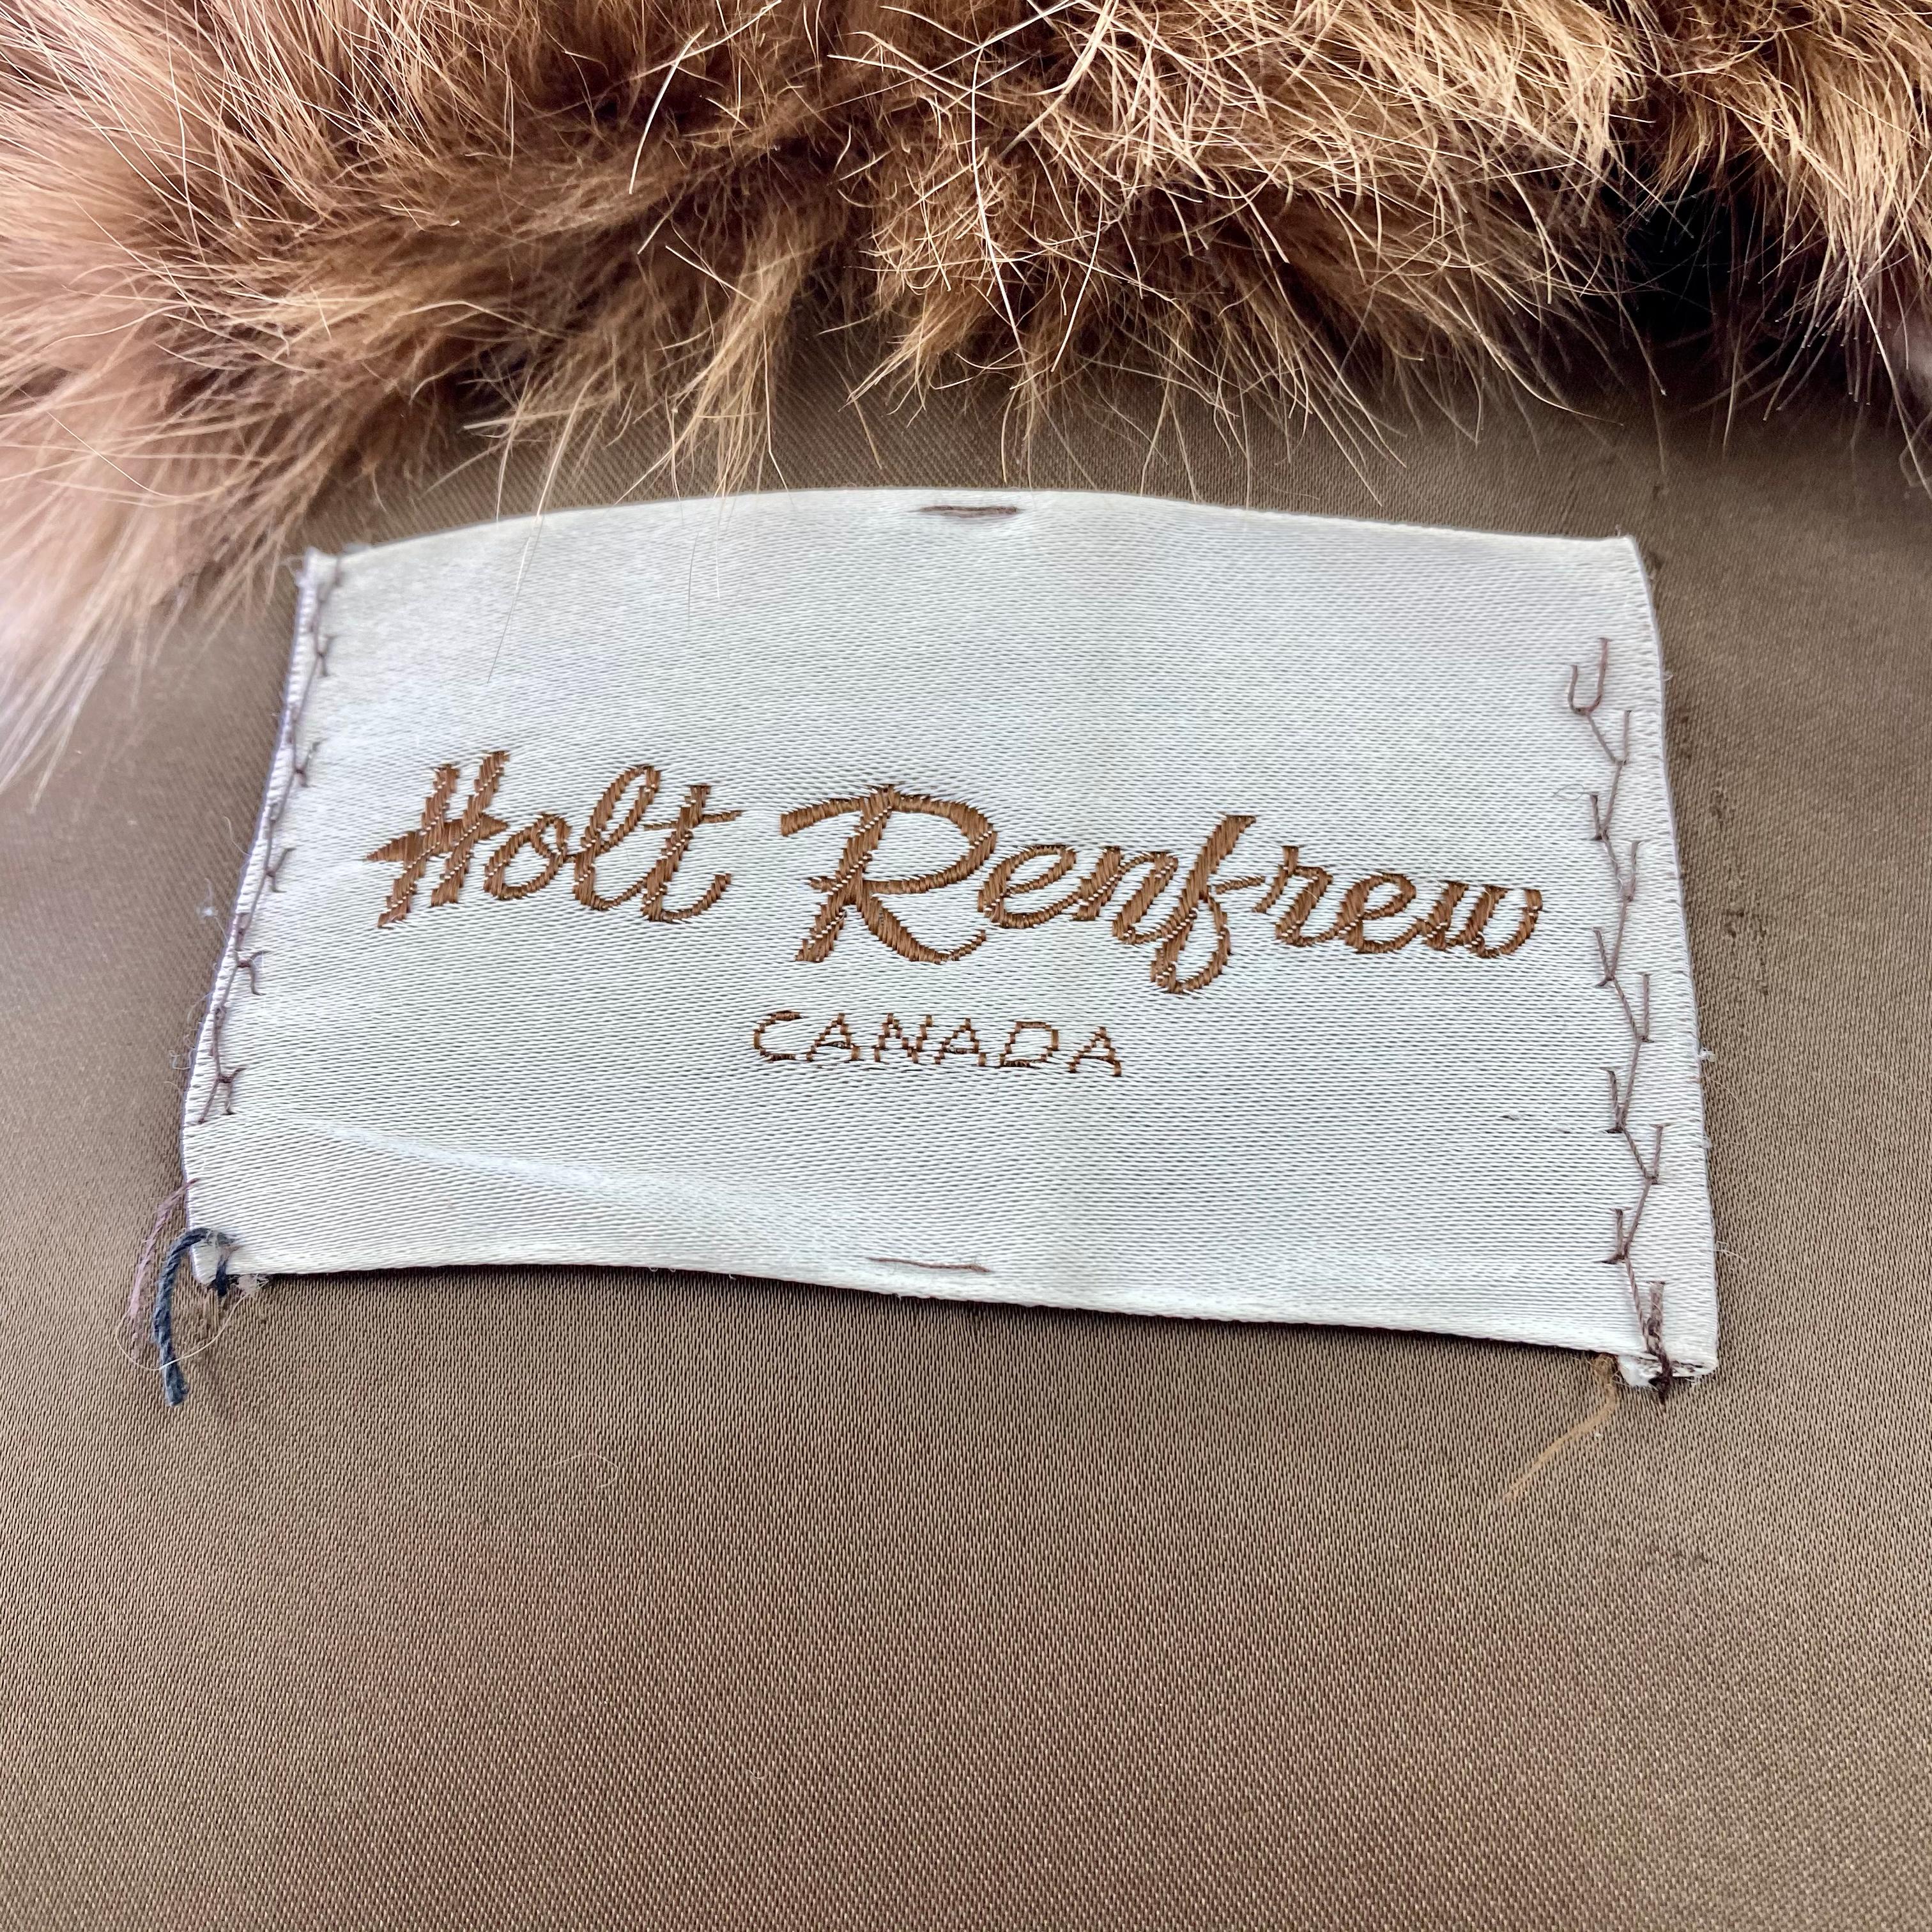 Women's or Men's Holt Renfrew Dyed Silver Fox Fur Stroller Coat (Size 10-M)